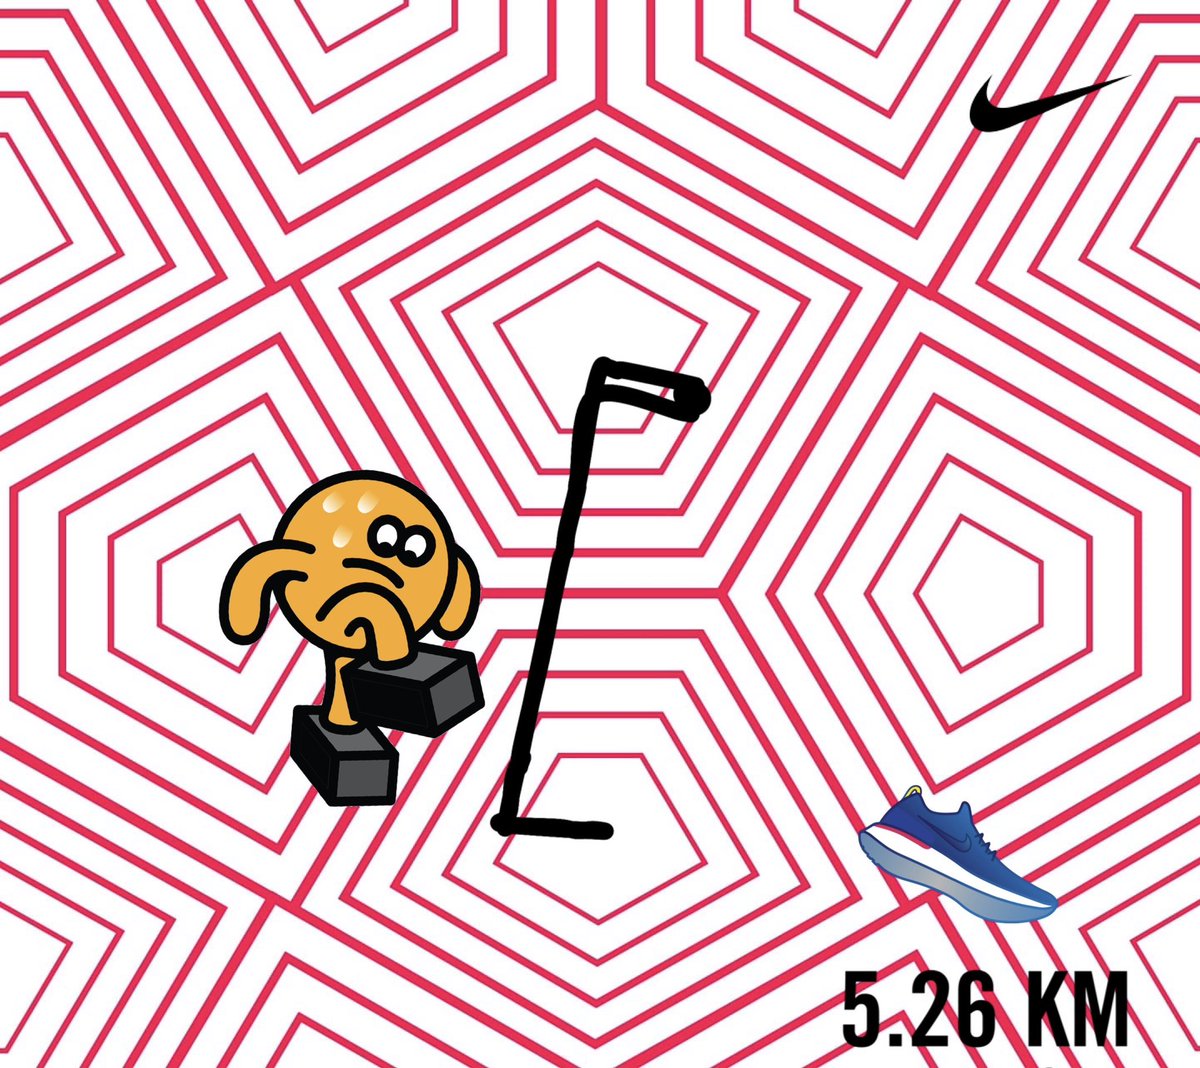 Corrí 5.06 kms Nike⁠ Run Club 🇲🇽 #JustDoIt #nikeplus #nikerunclub #nikerunning #applewatch #iwatch #osojcrg #desayunandokms #nrc  #everyrunhasapurpose #run #running #runner #totalrunning #yoelegicorrer #instarunners #inspirarunning 
#everydamnmile #consejerosmx